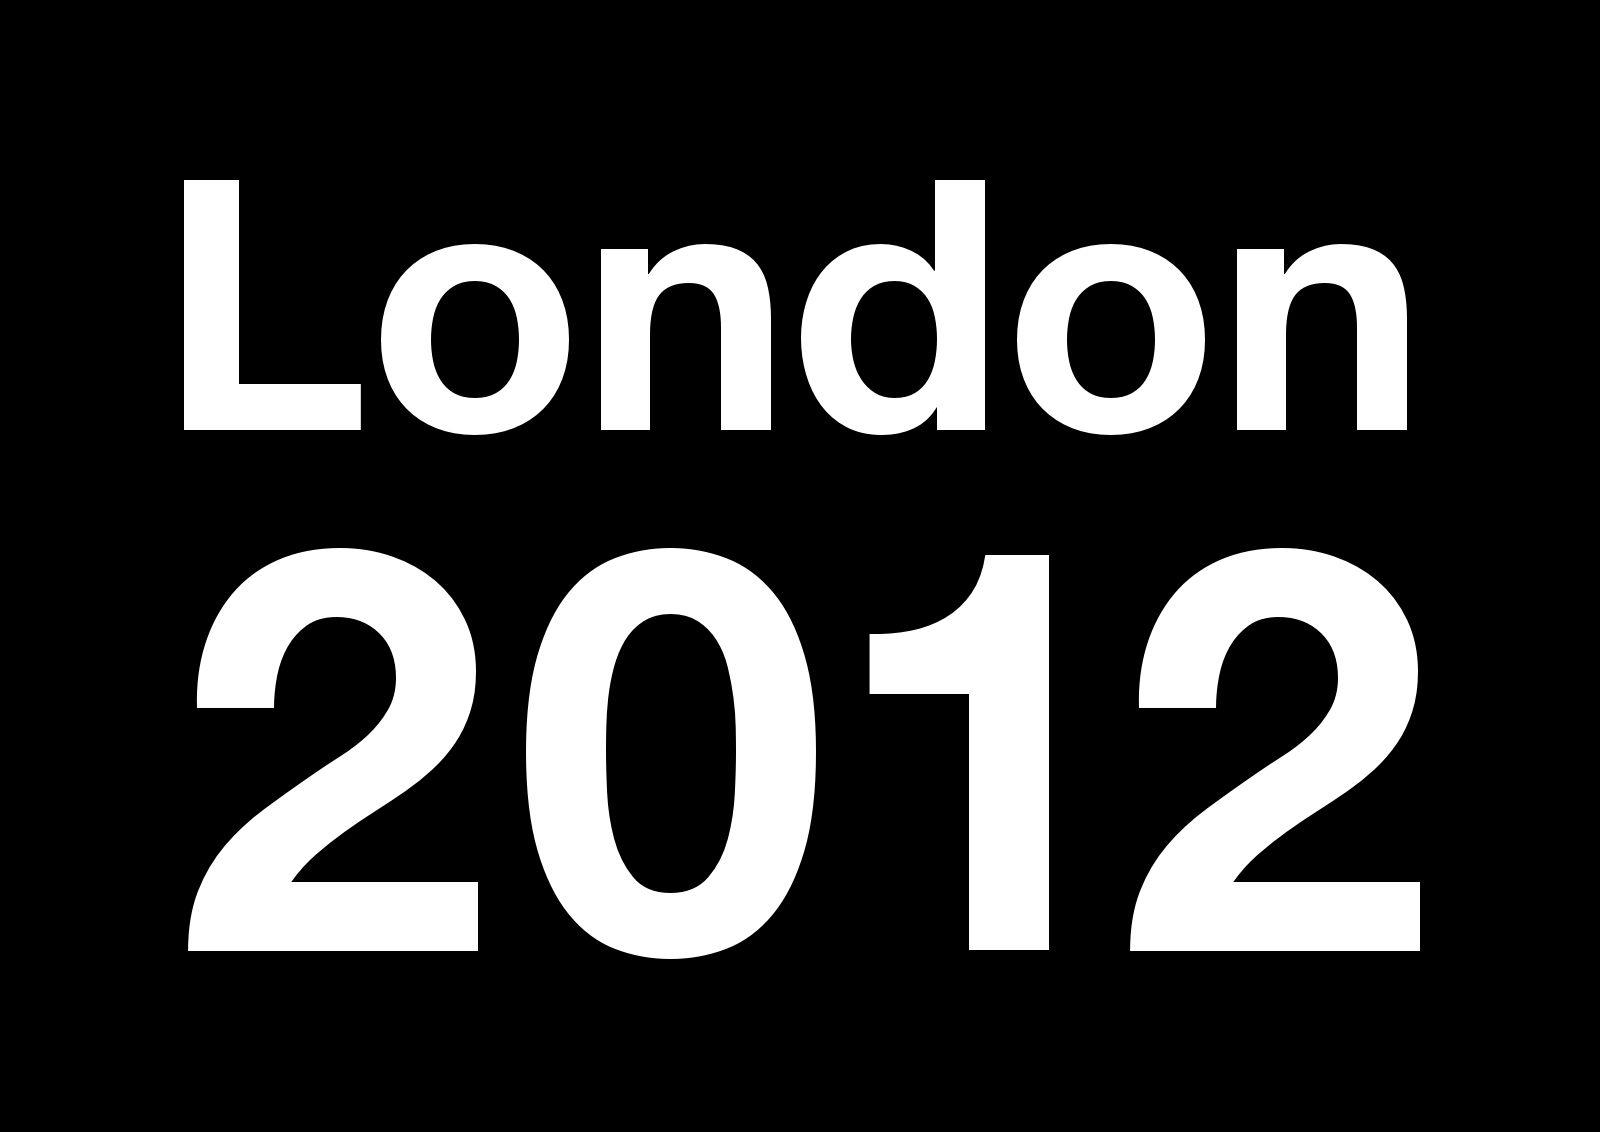 2012 Logo - New London 2012 Olympic Logo